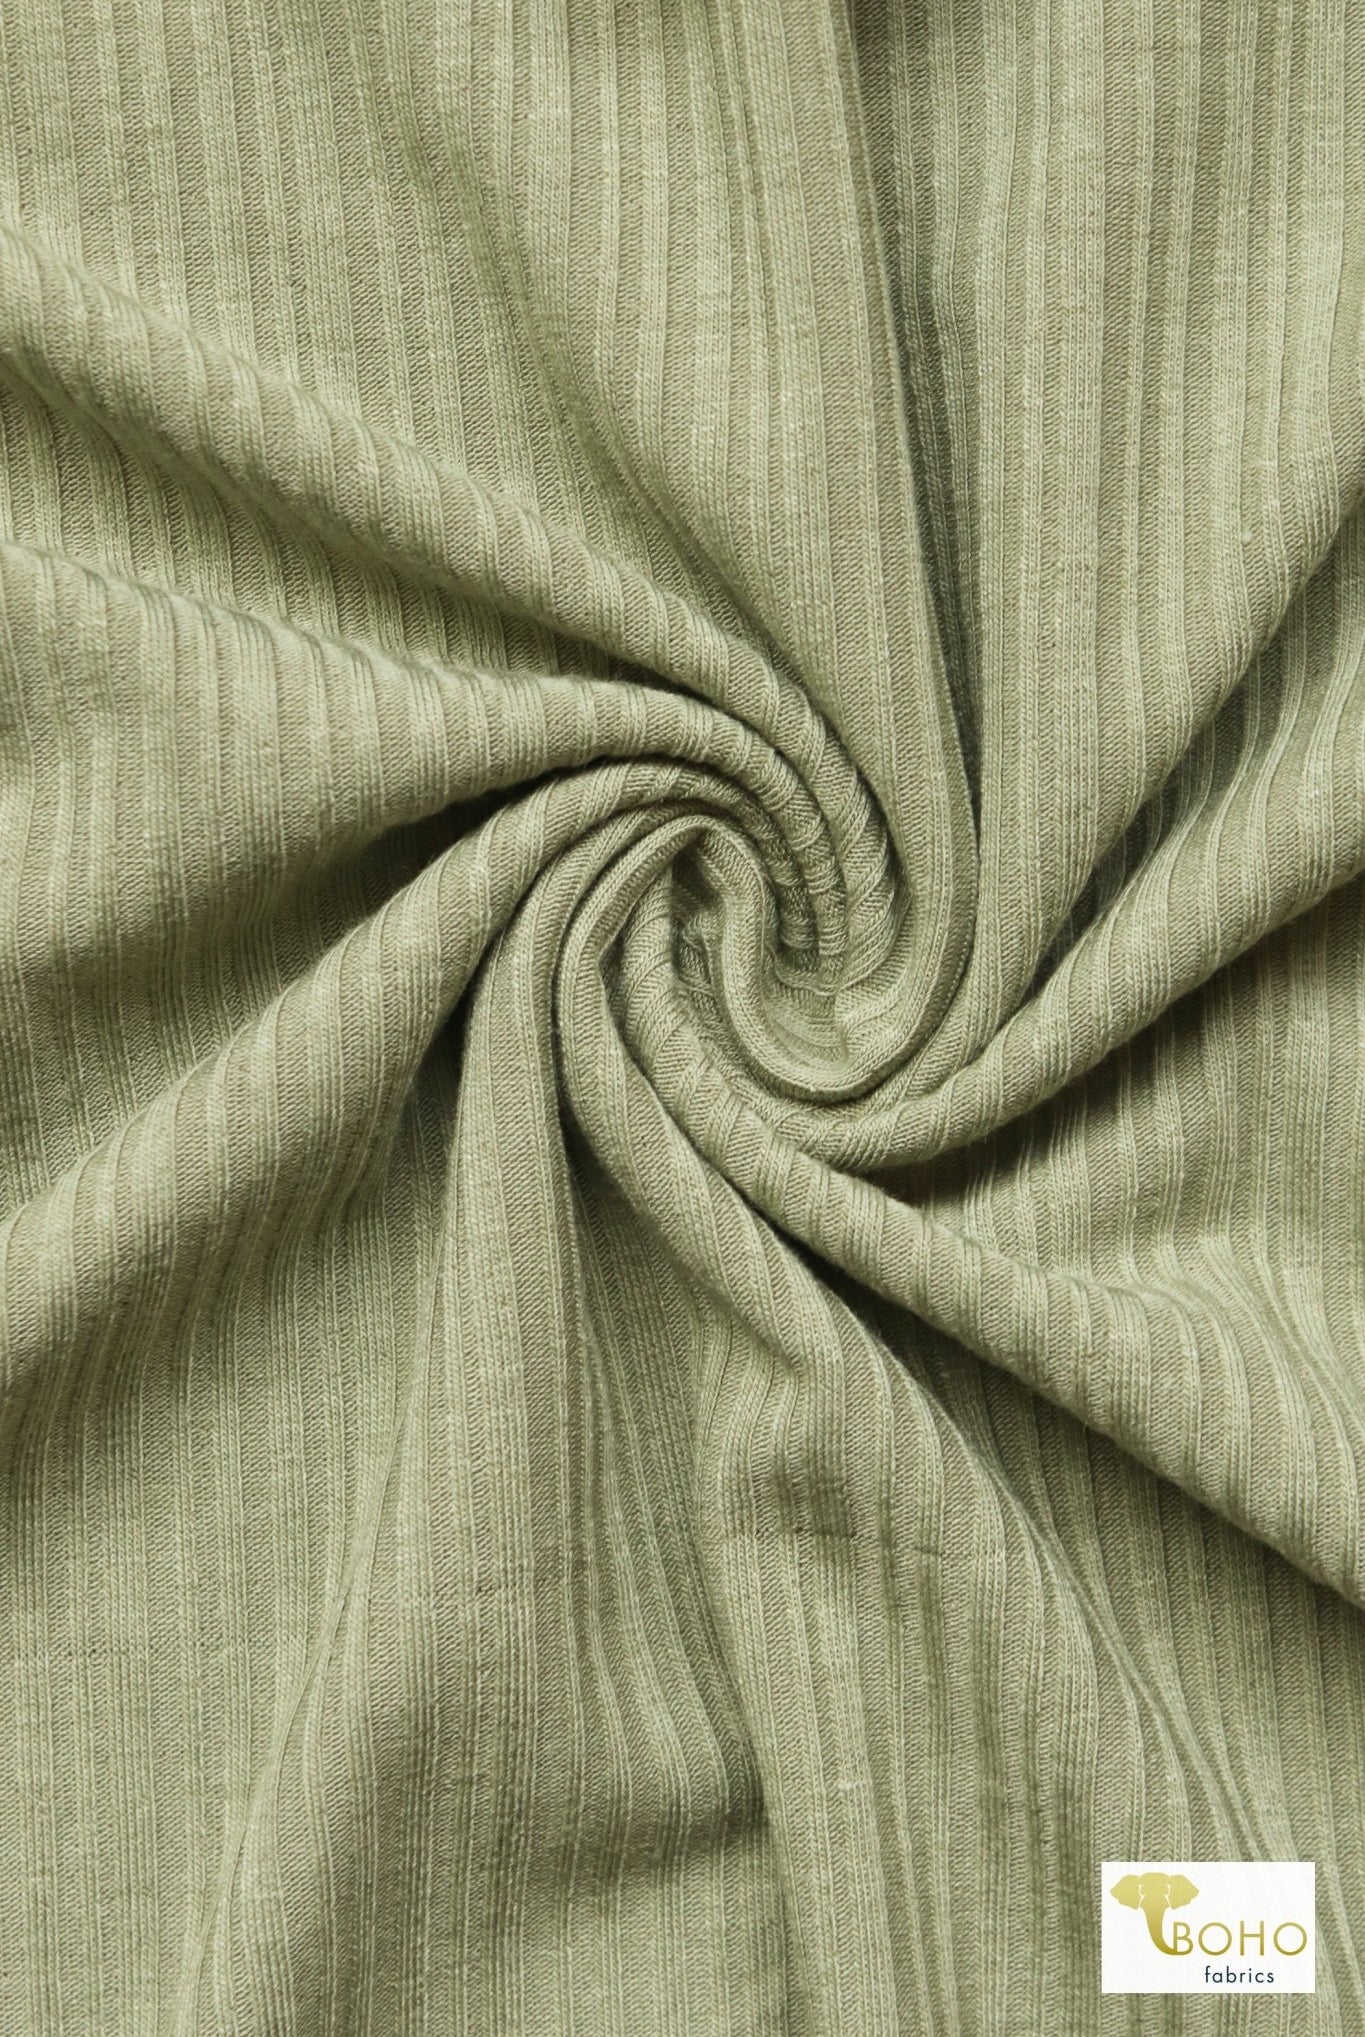 Iced Sage, Varigated Rib Knit Fabric - Boho Fabrics